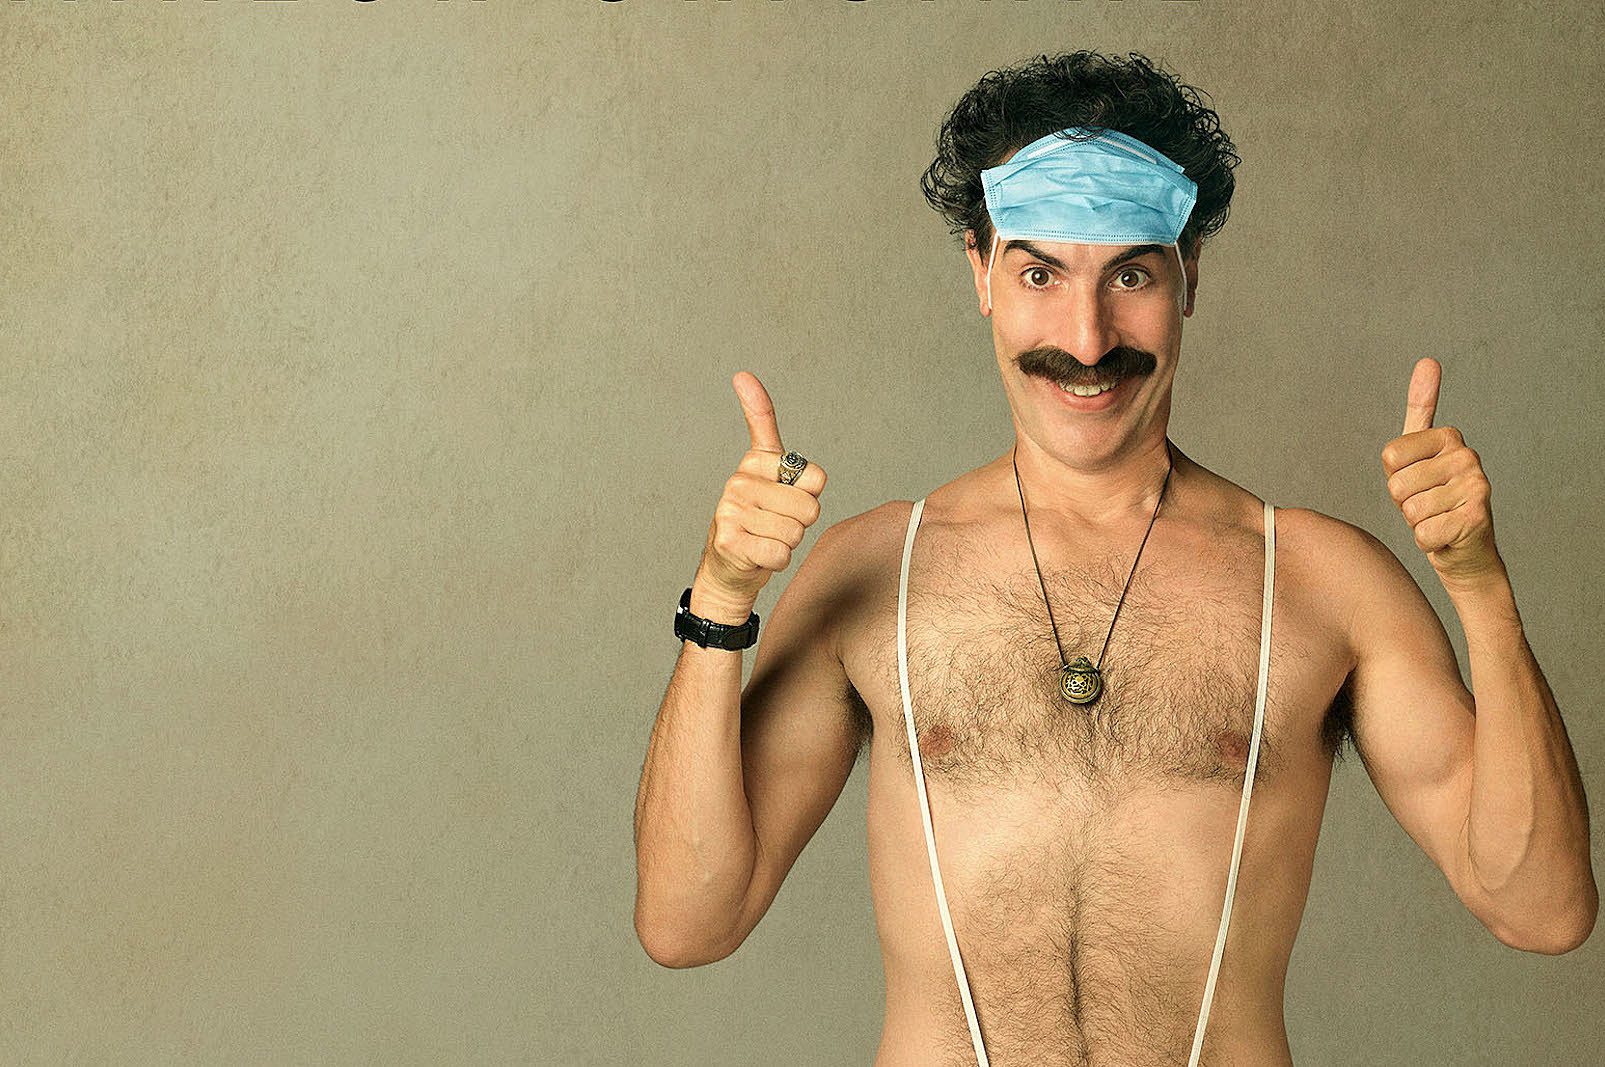 Borat Subsequent Moviefilm Review | Binge Watch